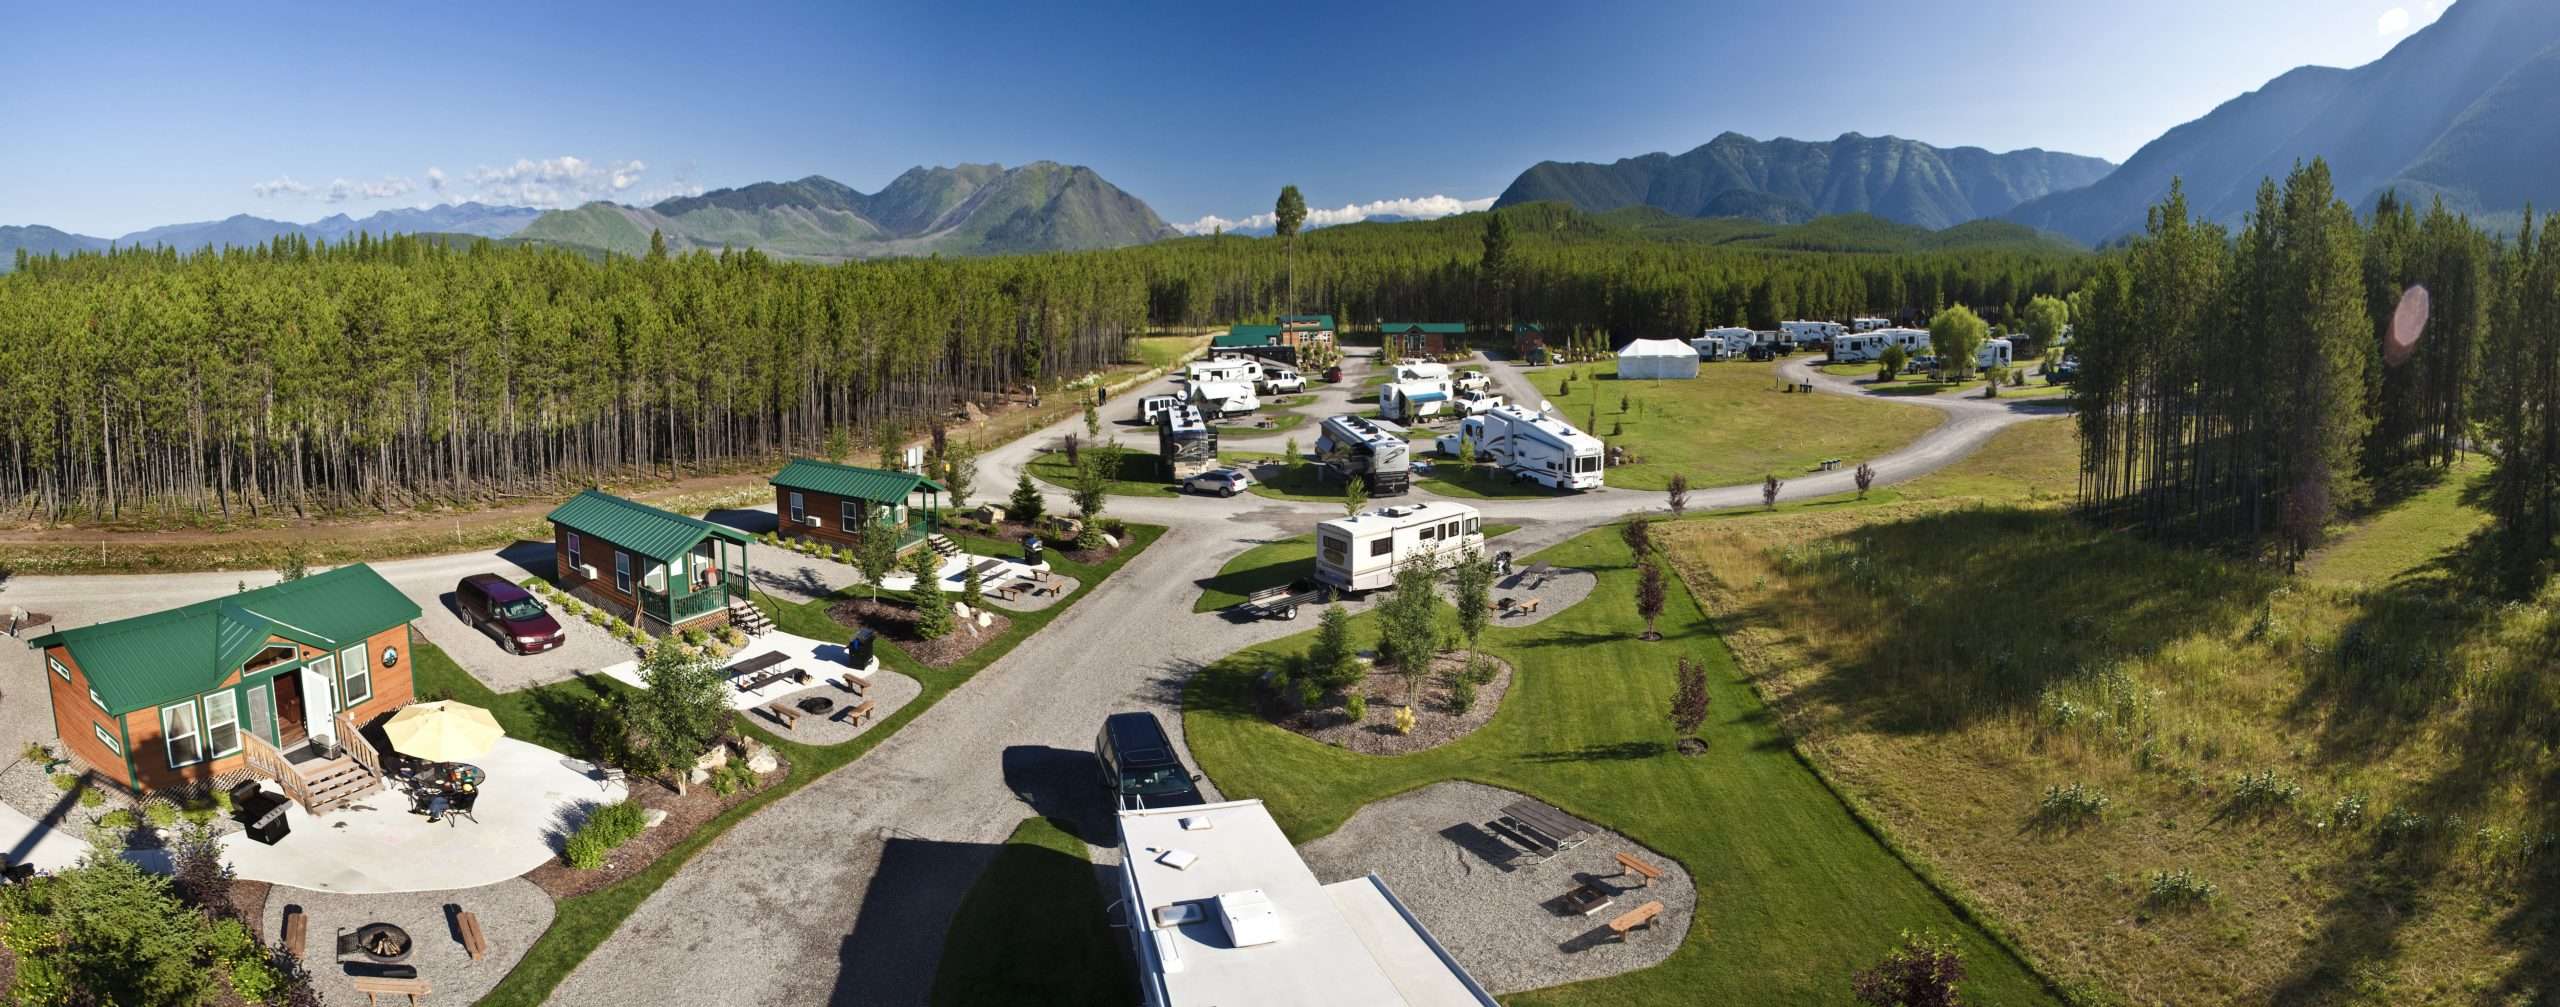 Top 10 Glacier National Park Campgrounds &  RV Parks